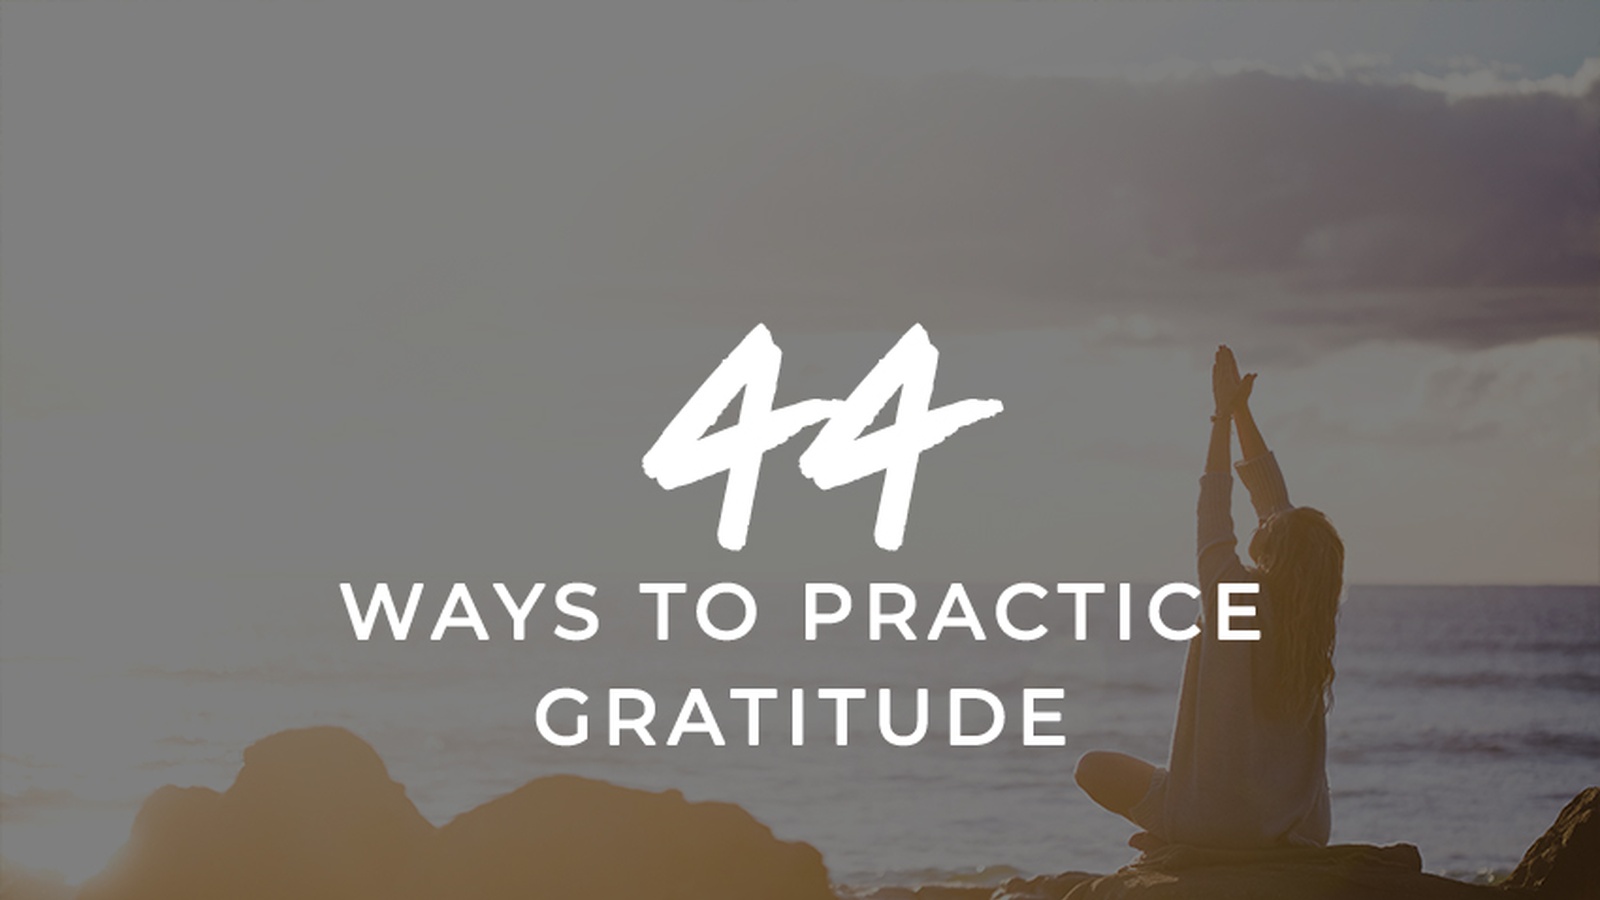 44 Ways to Practice Gratitude